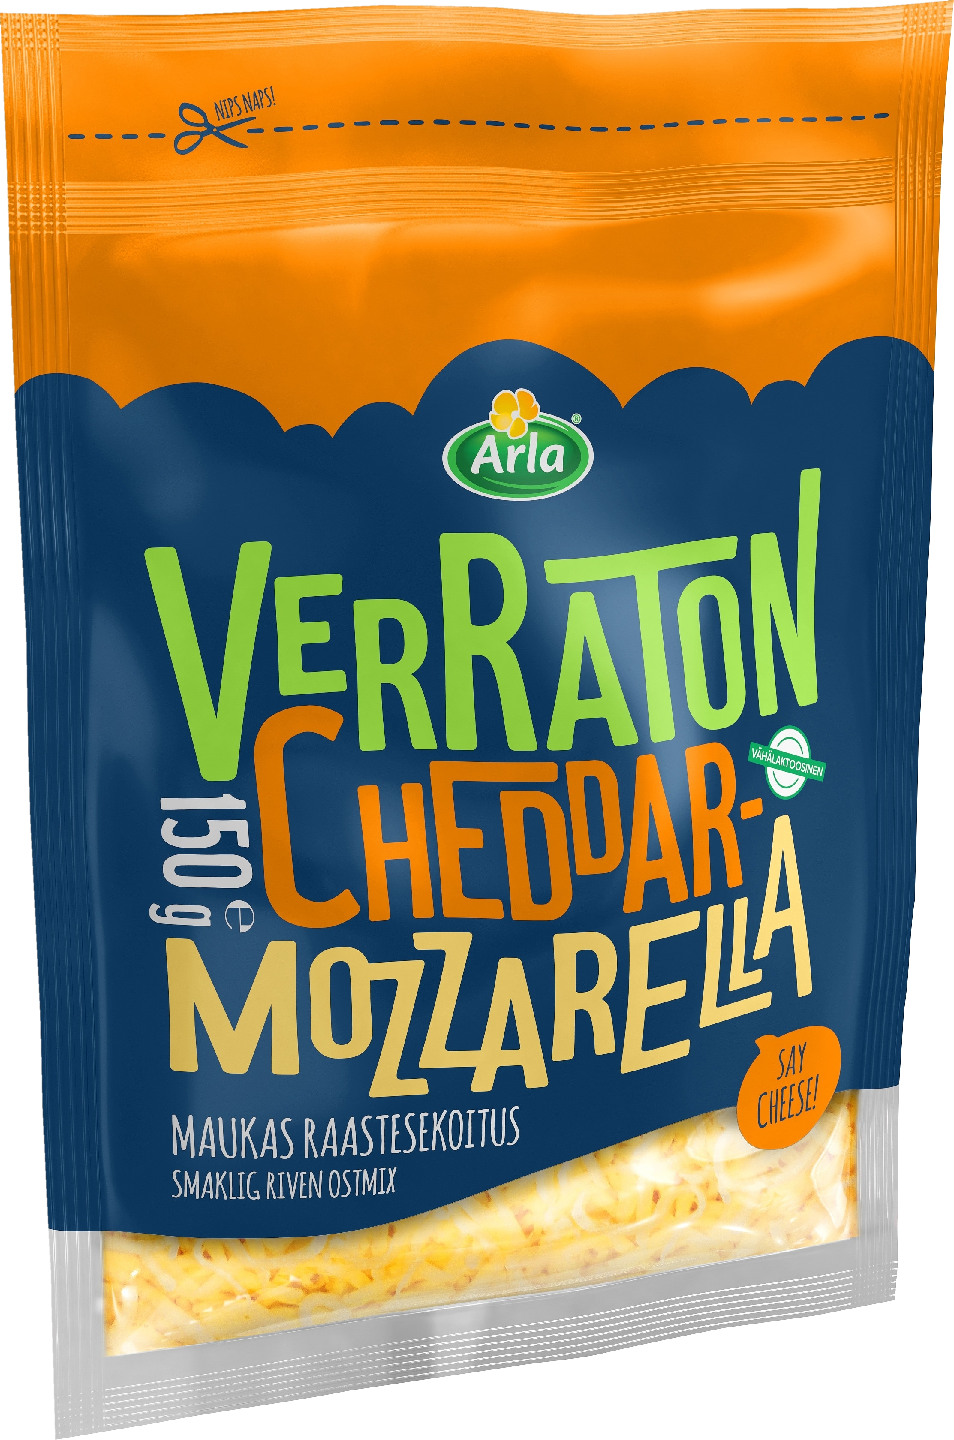 Arla Verraton Cheddar-Mozzarella 150g raaste